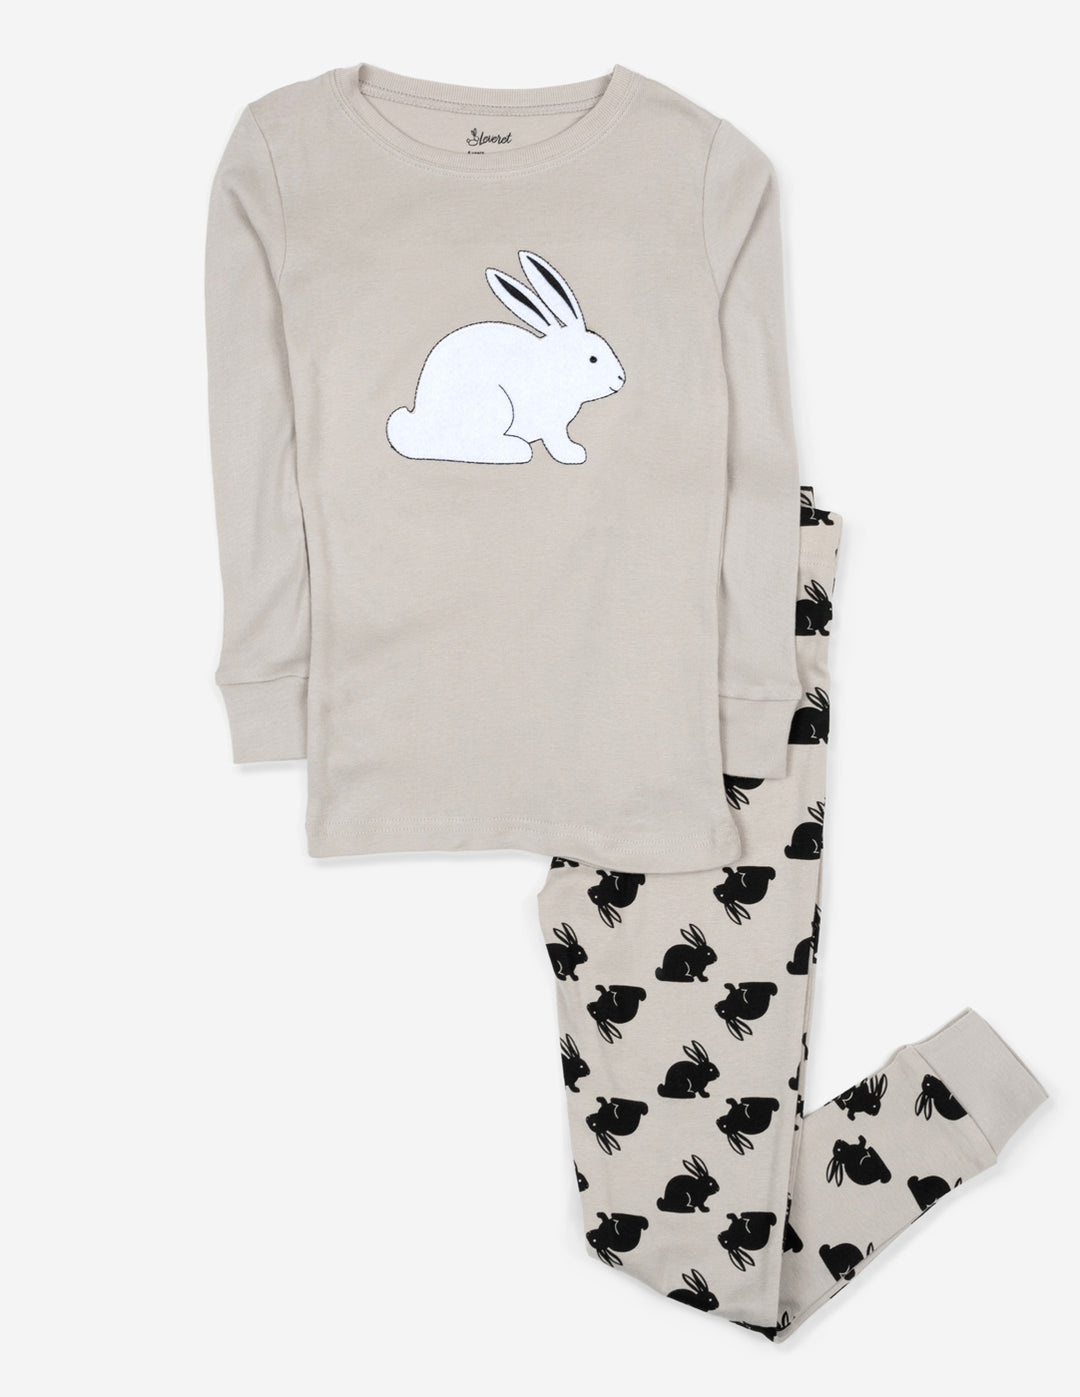 Boys Matching Family Short Raglan Sleeve Easter Bunny Snug Fit Cotton  Pajamas